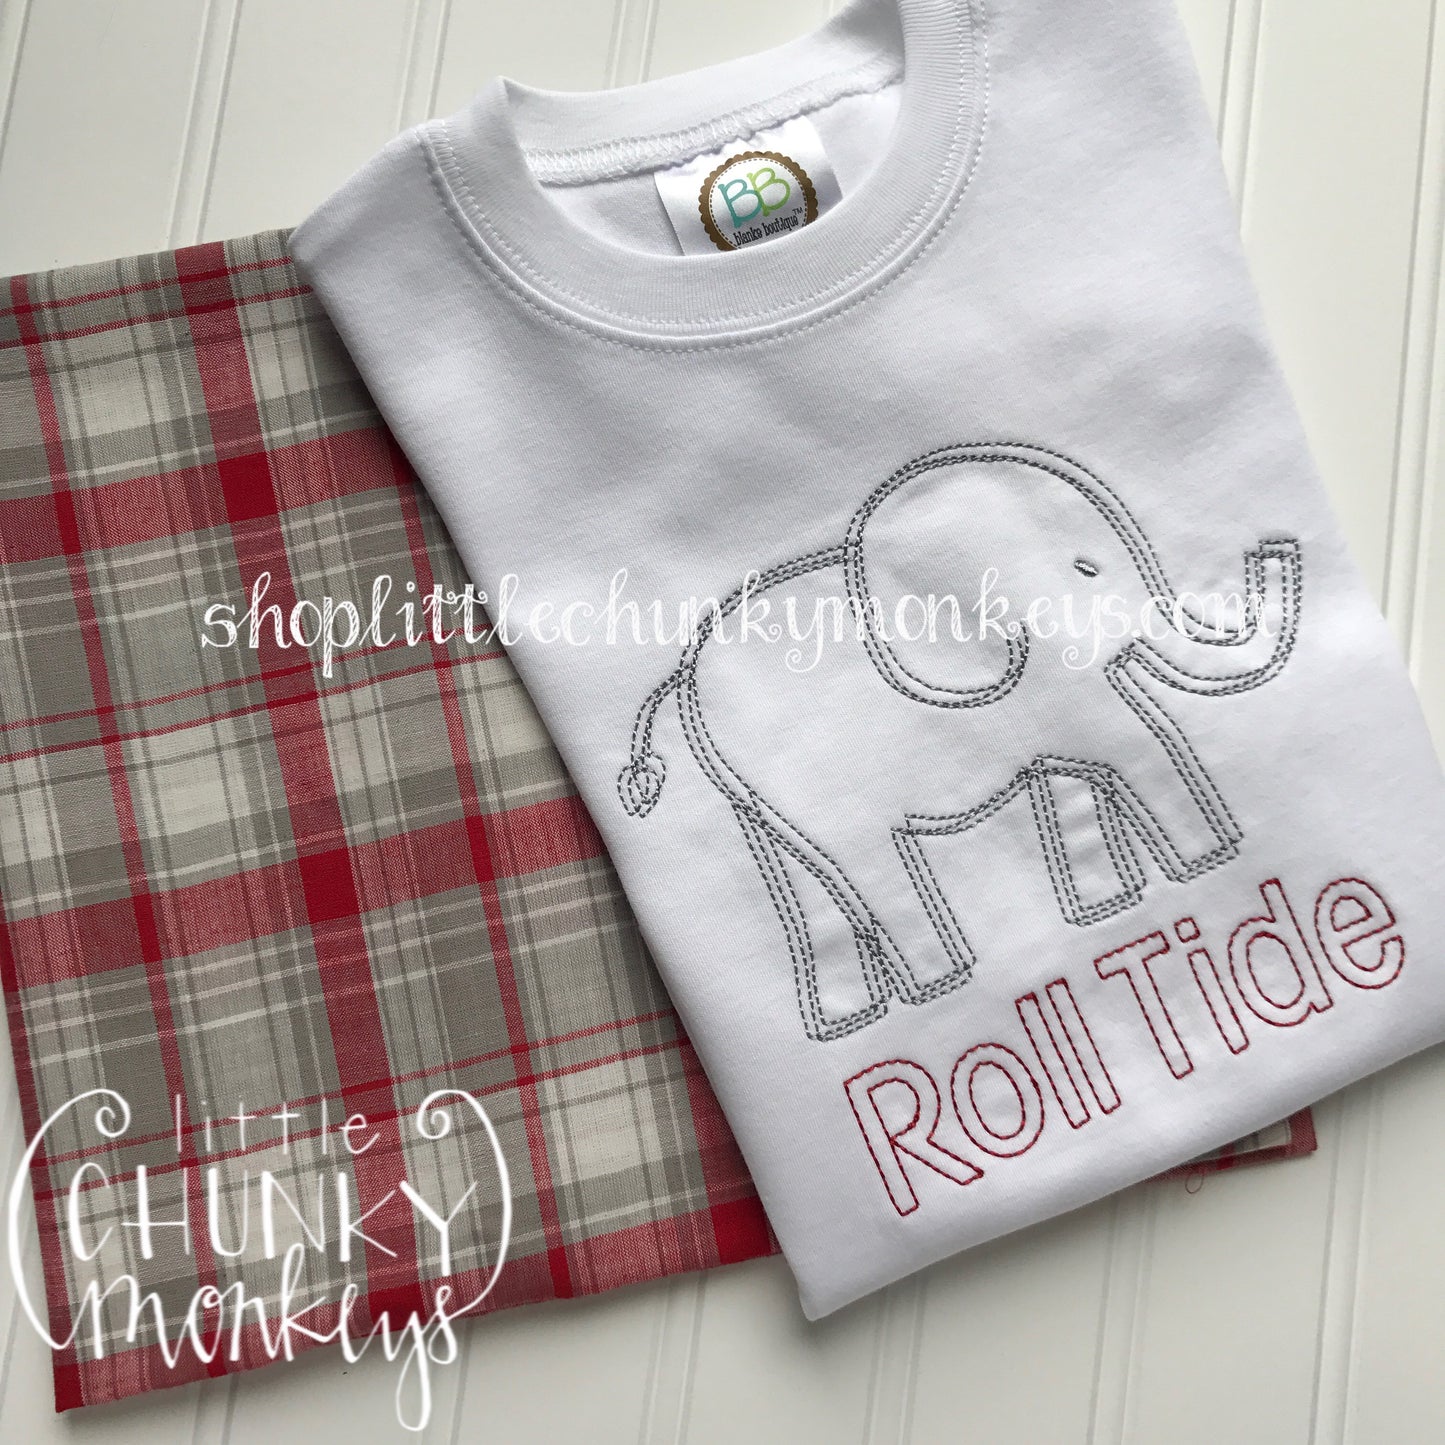 Boy Shirt - Stitch Elephant Shirt